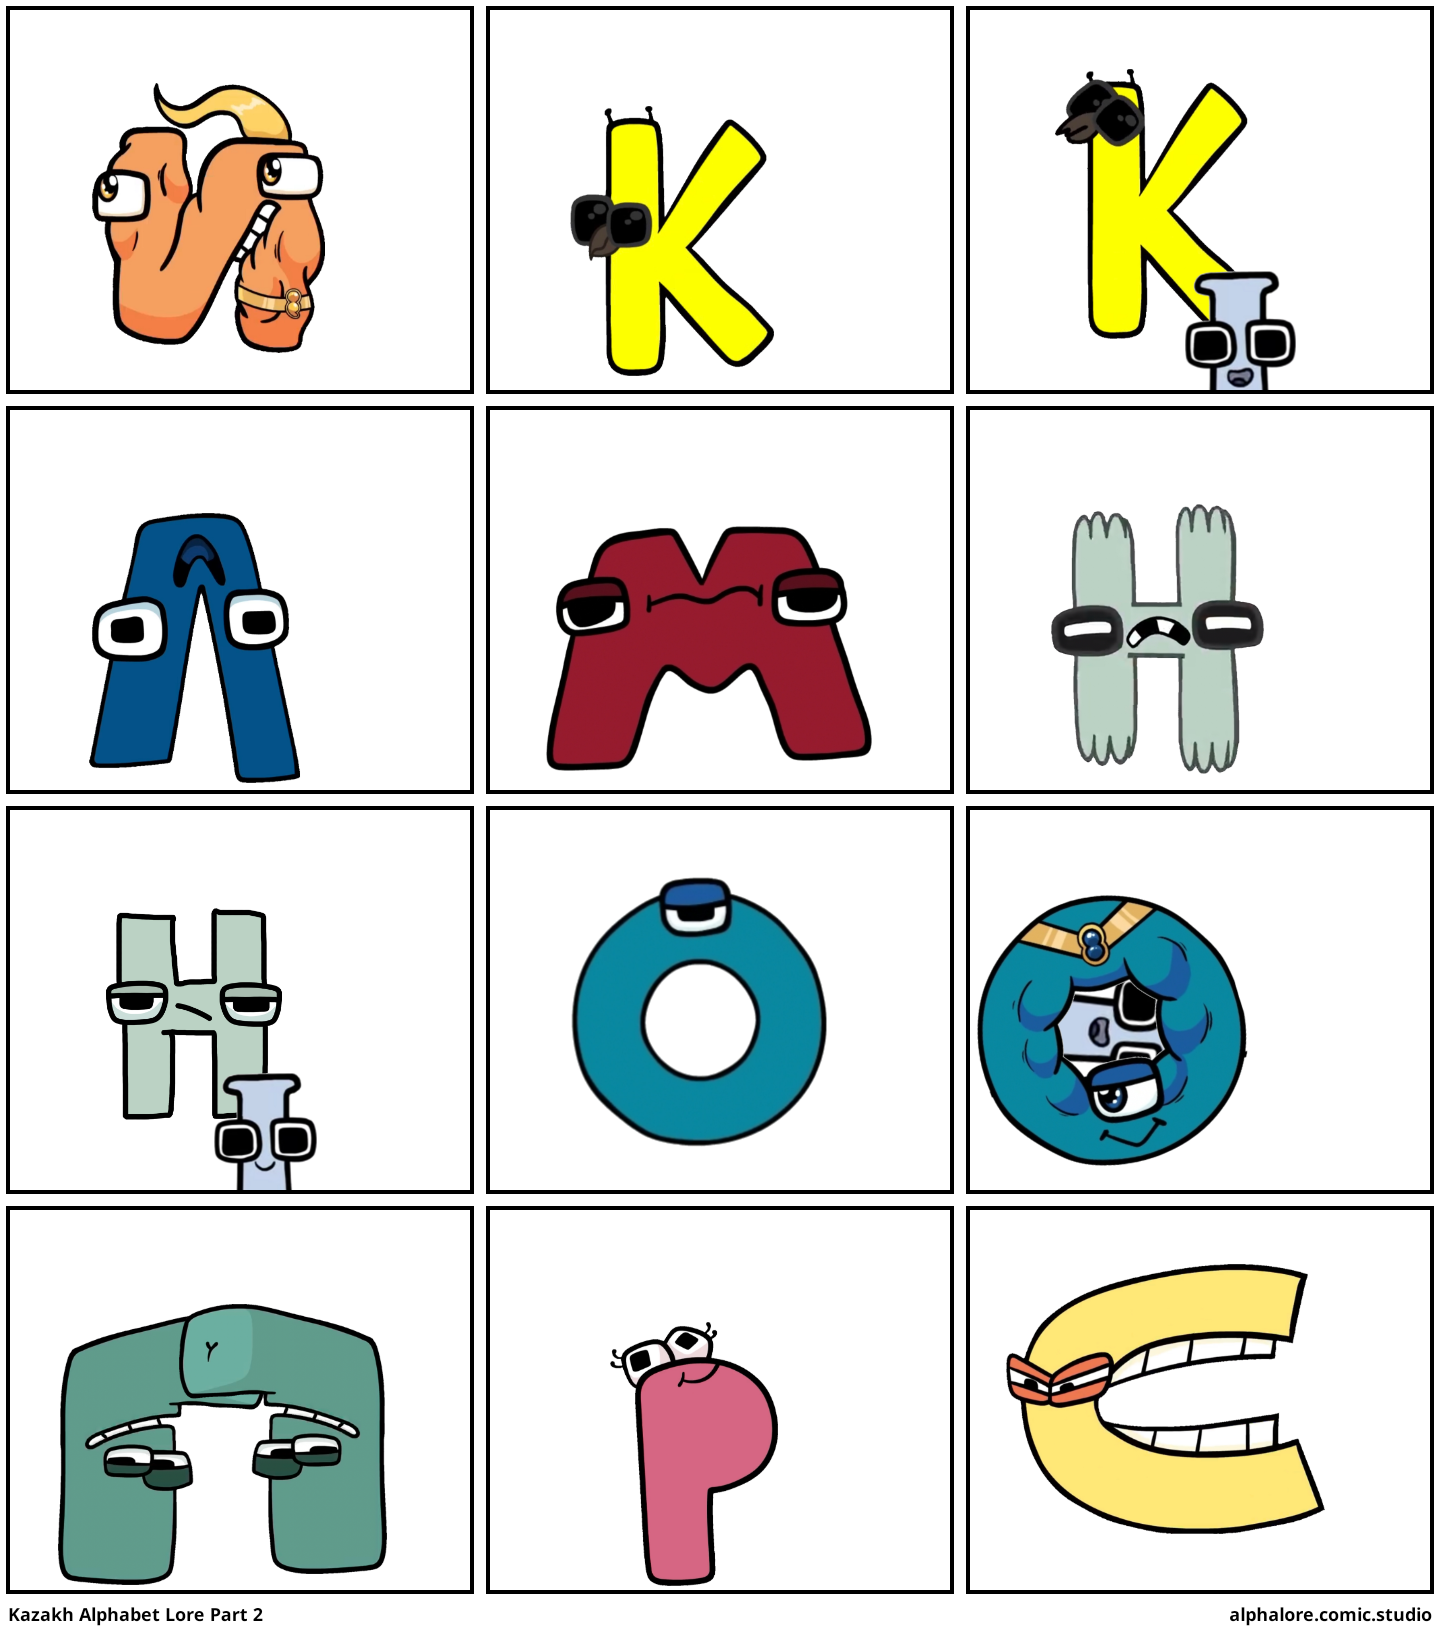 Kazakh alphabet lore - Comic Studio